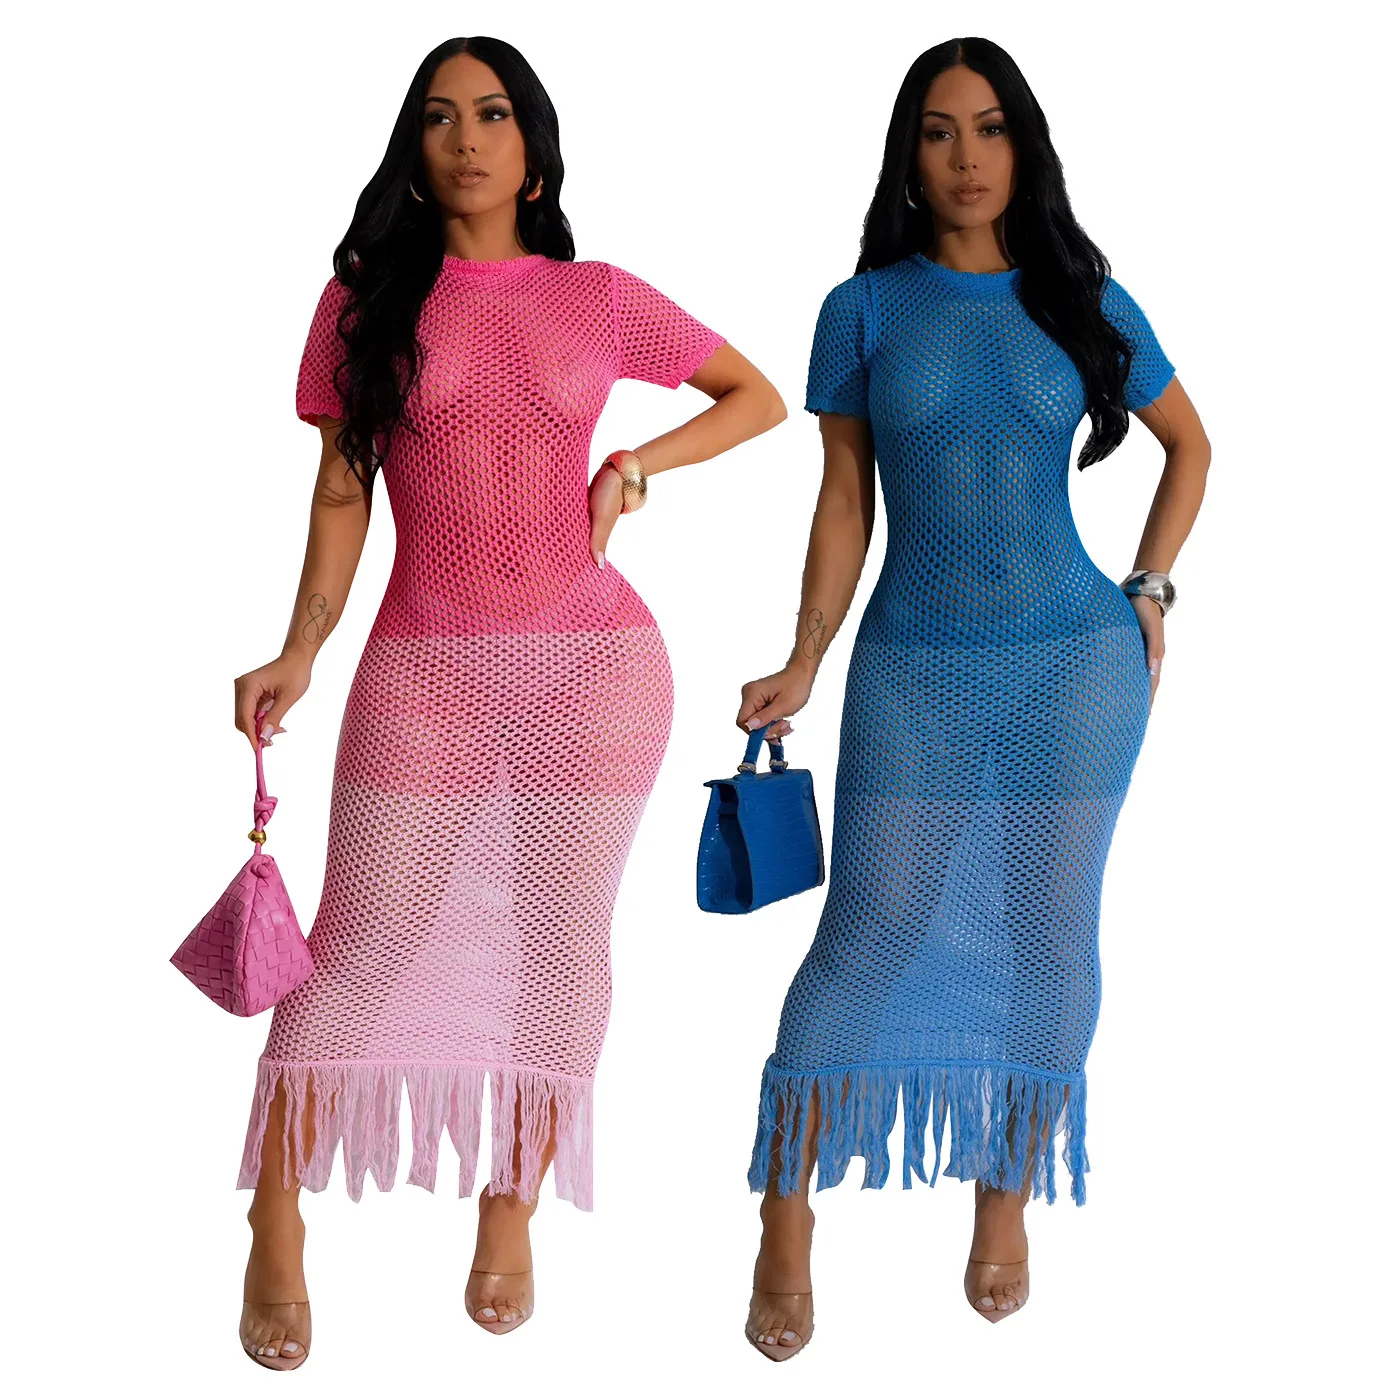 

Summer Gradient Knitting Women Dress Holidays Beach Dresses Tassels Short Sleeves Club Nightclub Gowns